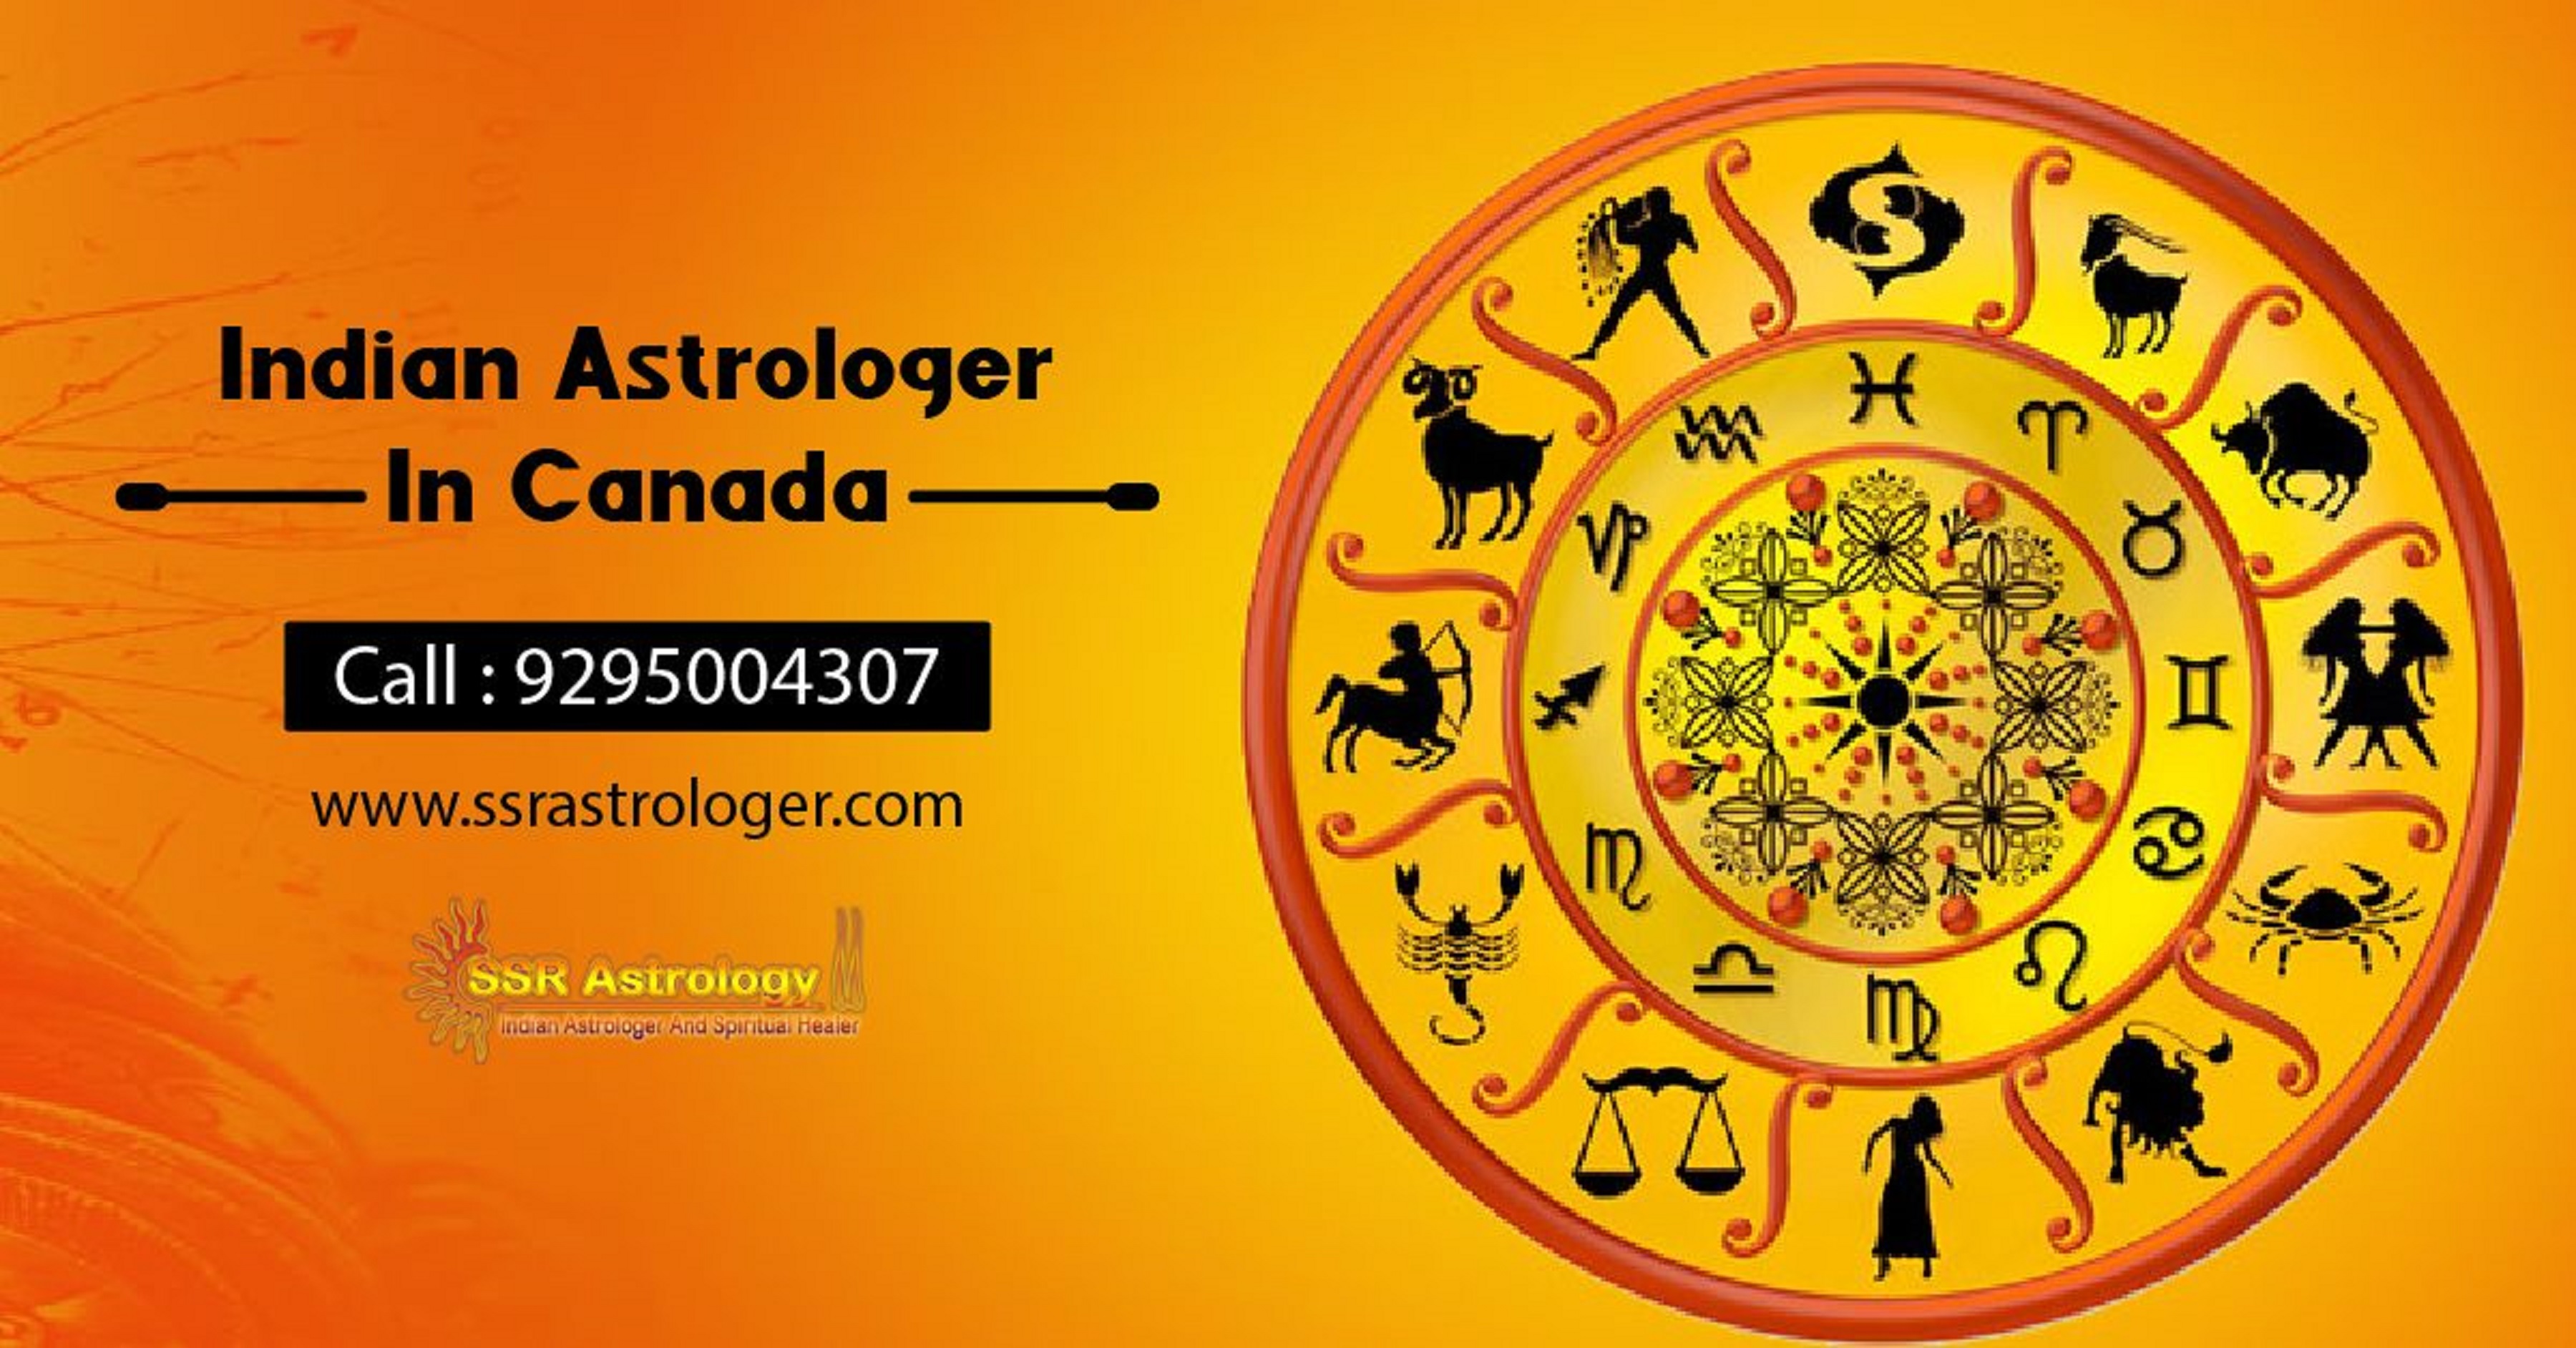 astrologer in Canada, best astrologer in Canada, famous astrologer in Canada, top astrologer in Canada, indian astrologer in Canada, best indian astrologer in Canada, top indian astrologer in Canada, famous indian astrologer in Canada, astrologer in Toronto, best astrologer in Toronto, famous astrologer in Toronto, top astrologer in Toronto, indian astrologer in Toronto, best indian astrologer in Toronto, top indian astrologer in Toronto, famous indian astrologer in Toronto, ontario, canada and mississauga.